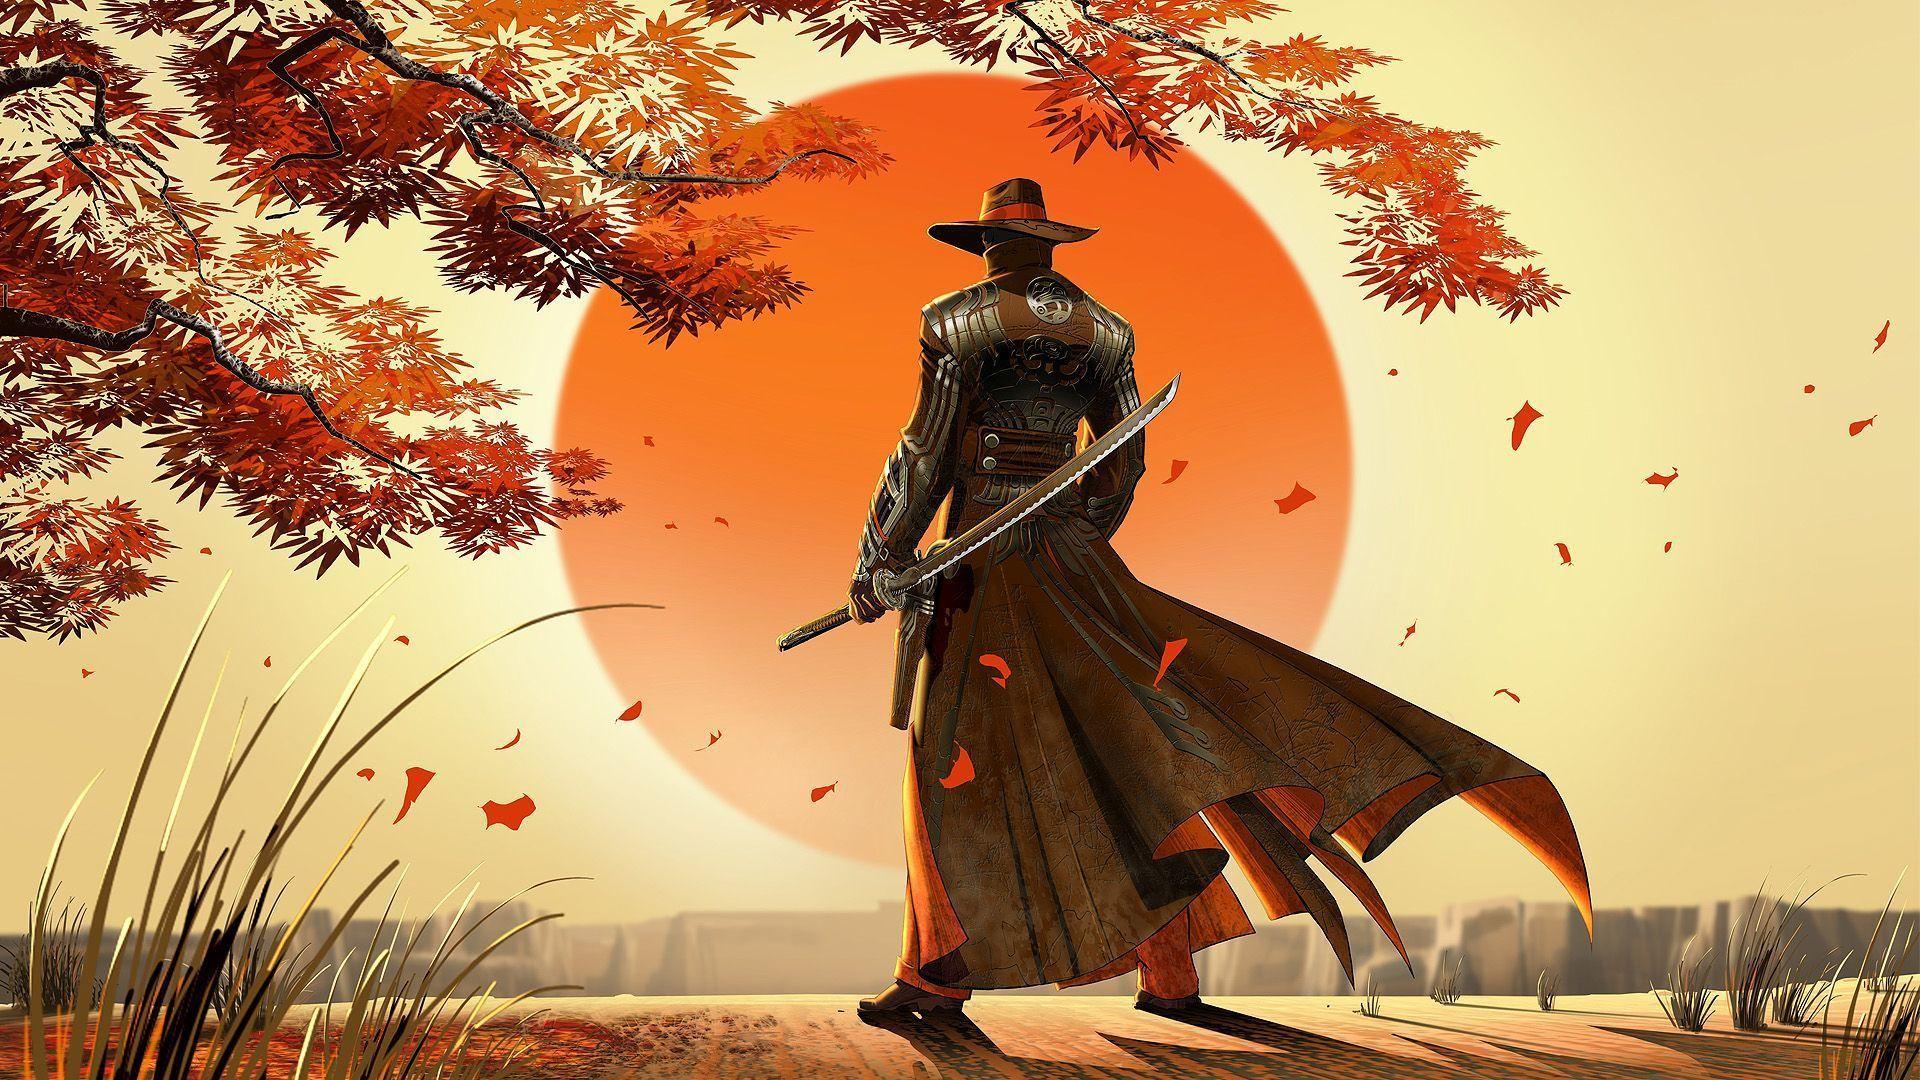 Cowboy Samurai Wallpapers - Top Free Cowboy Samurai Backgrounds ...